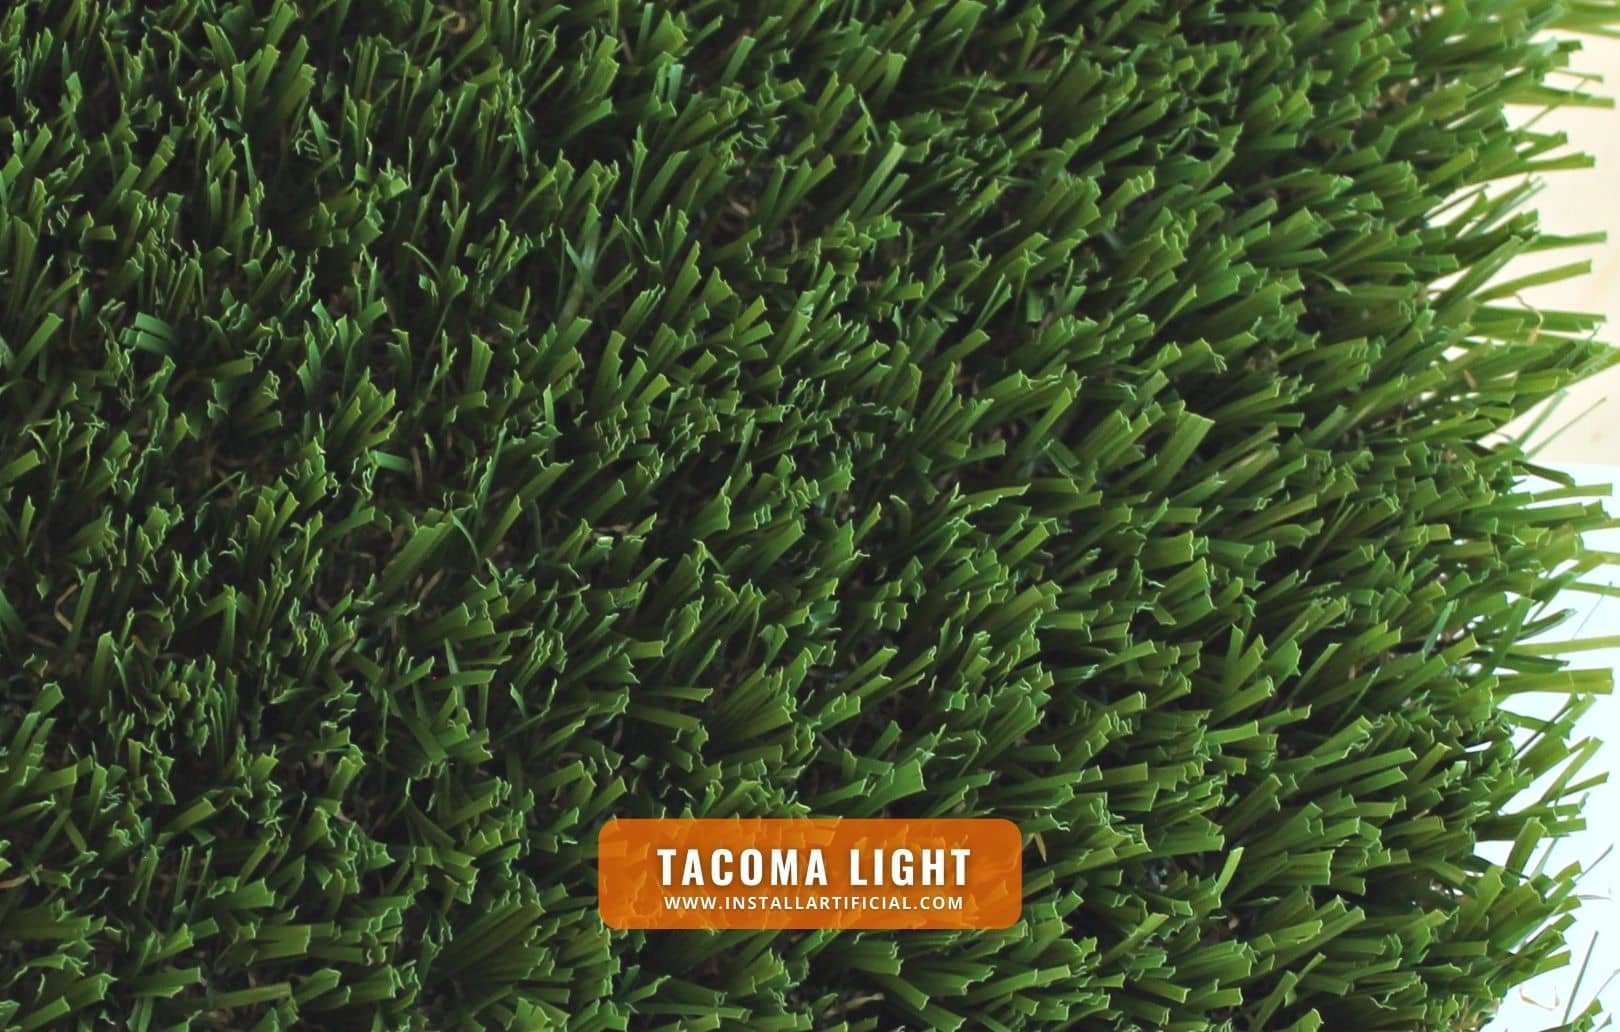 Tacoma Light, Synthetic Grass Warehouse, Everlast, top